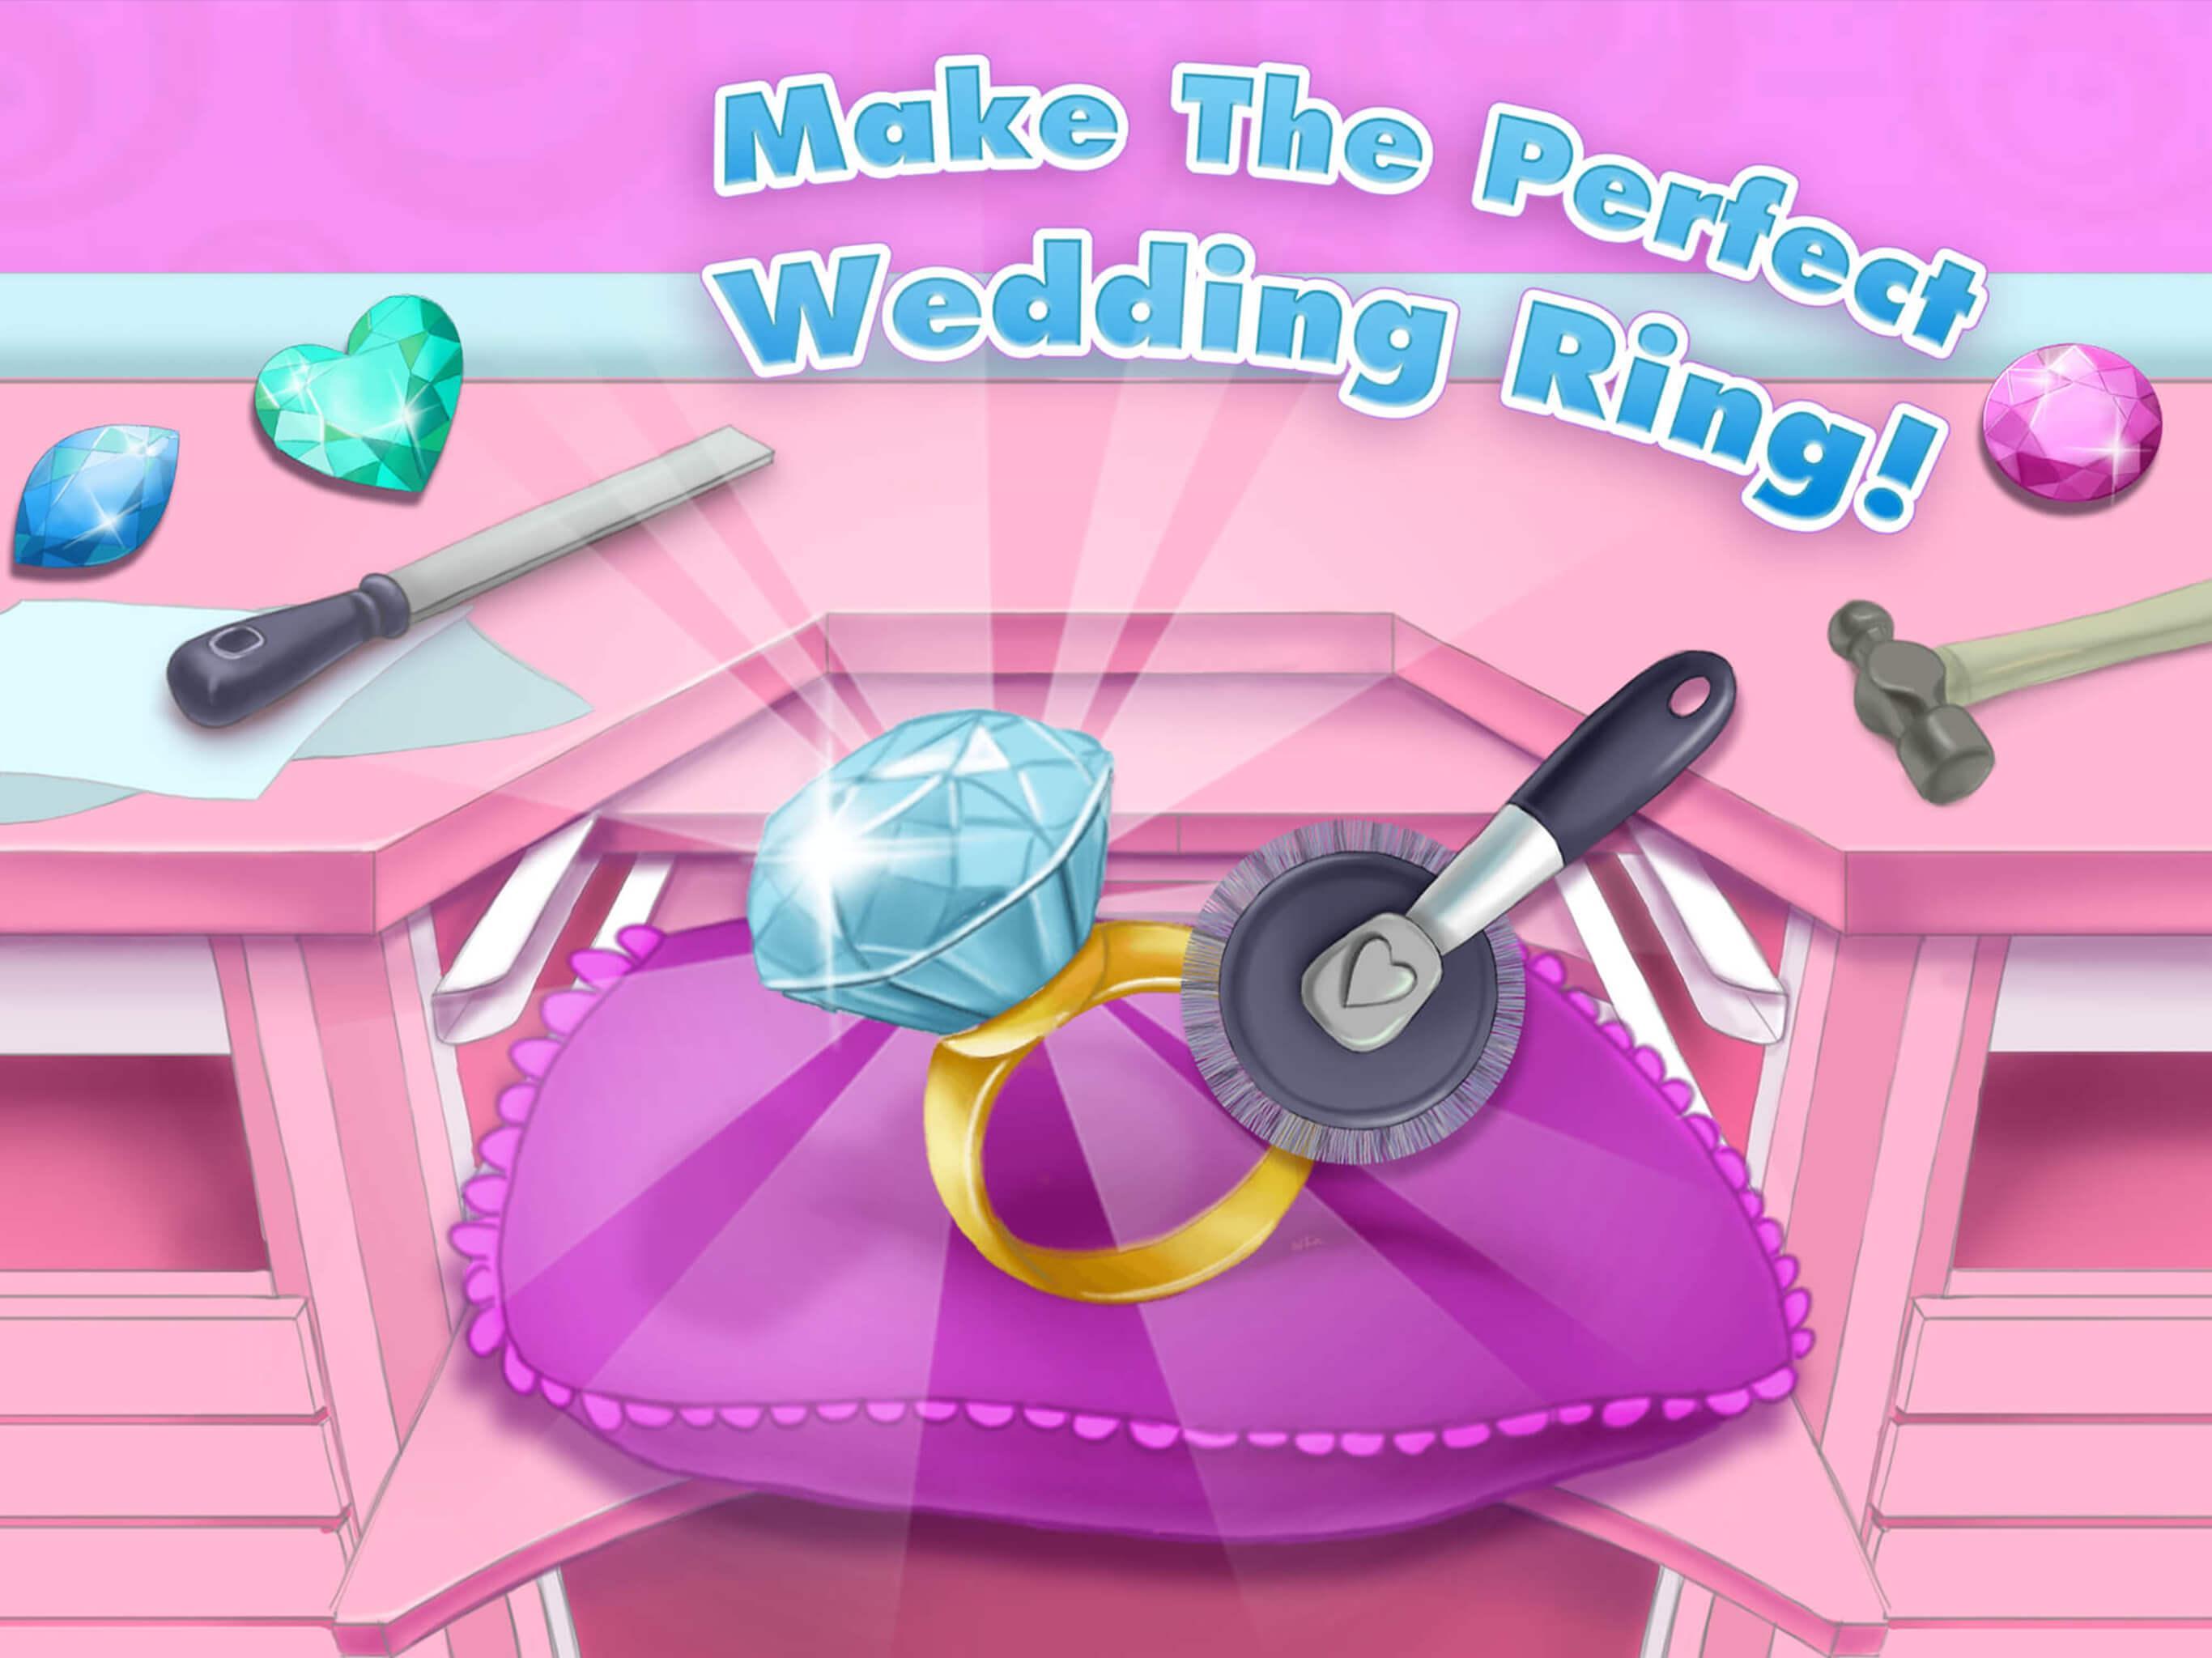 Princess Amy Wedding Salon 2 screenshot game